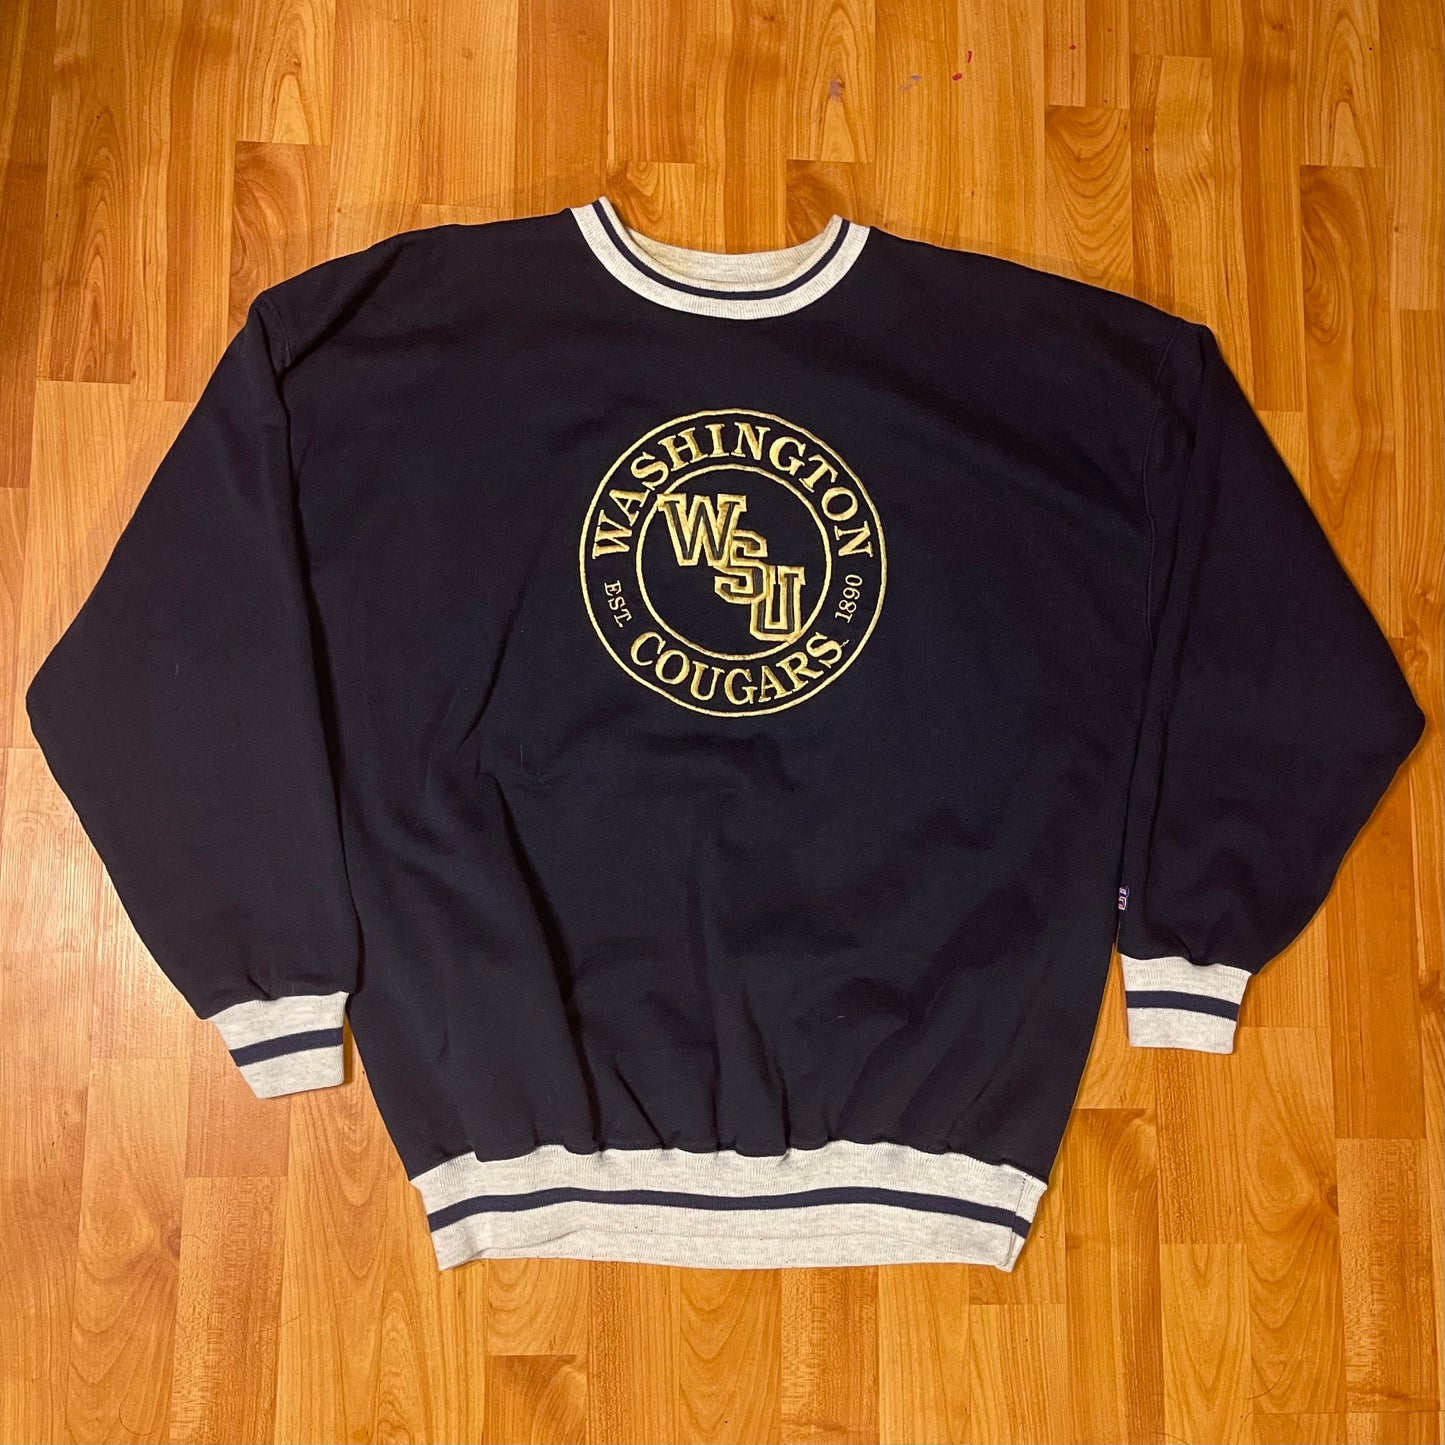 Washington cougars sweatshirt fits XL